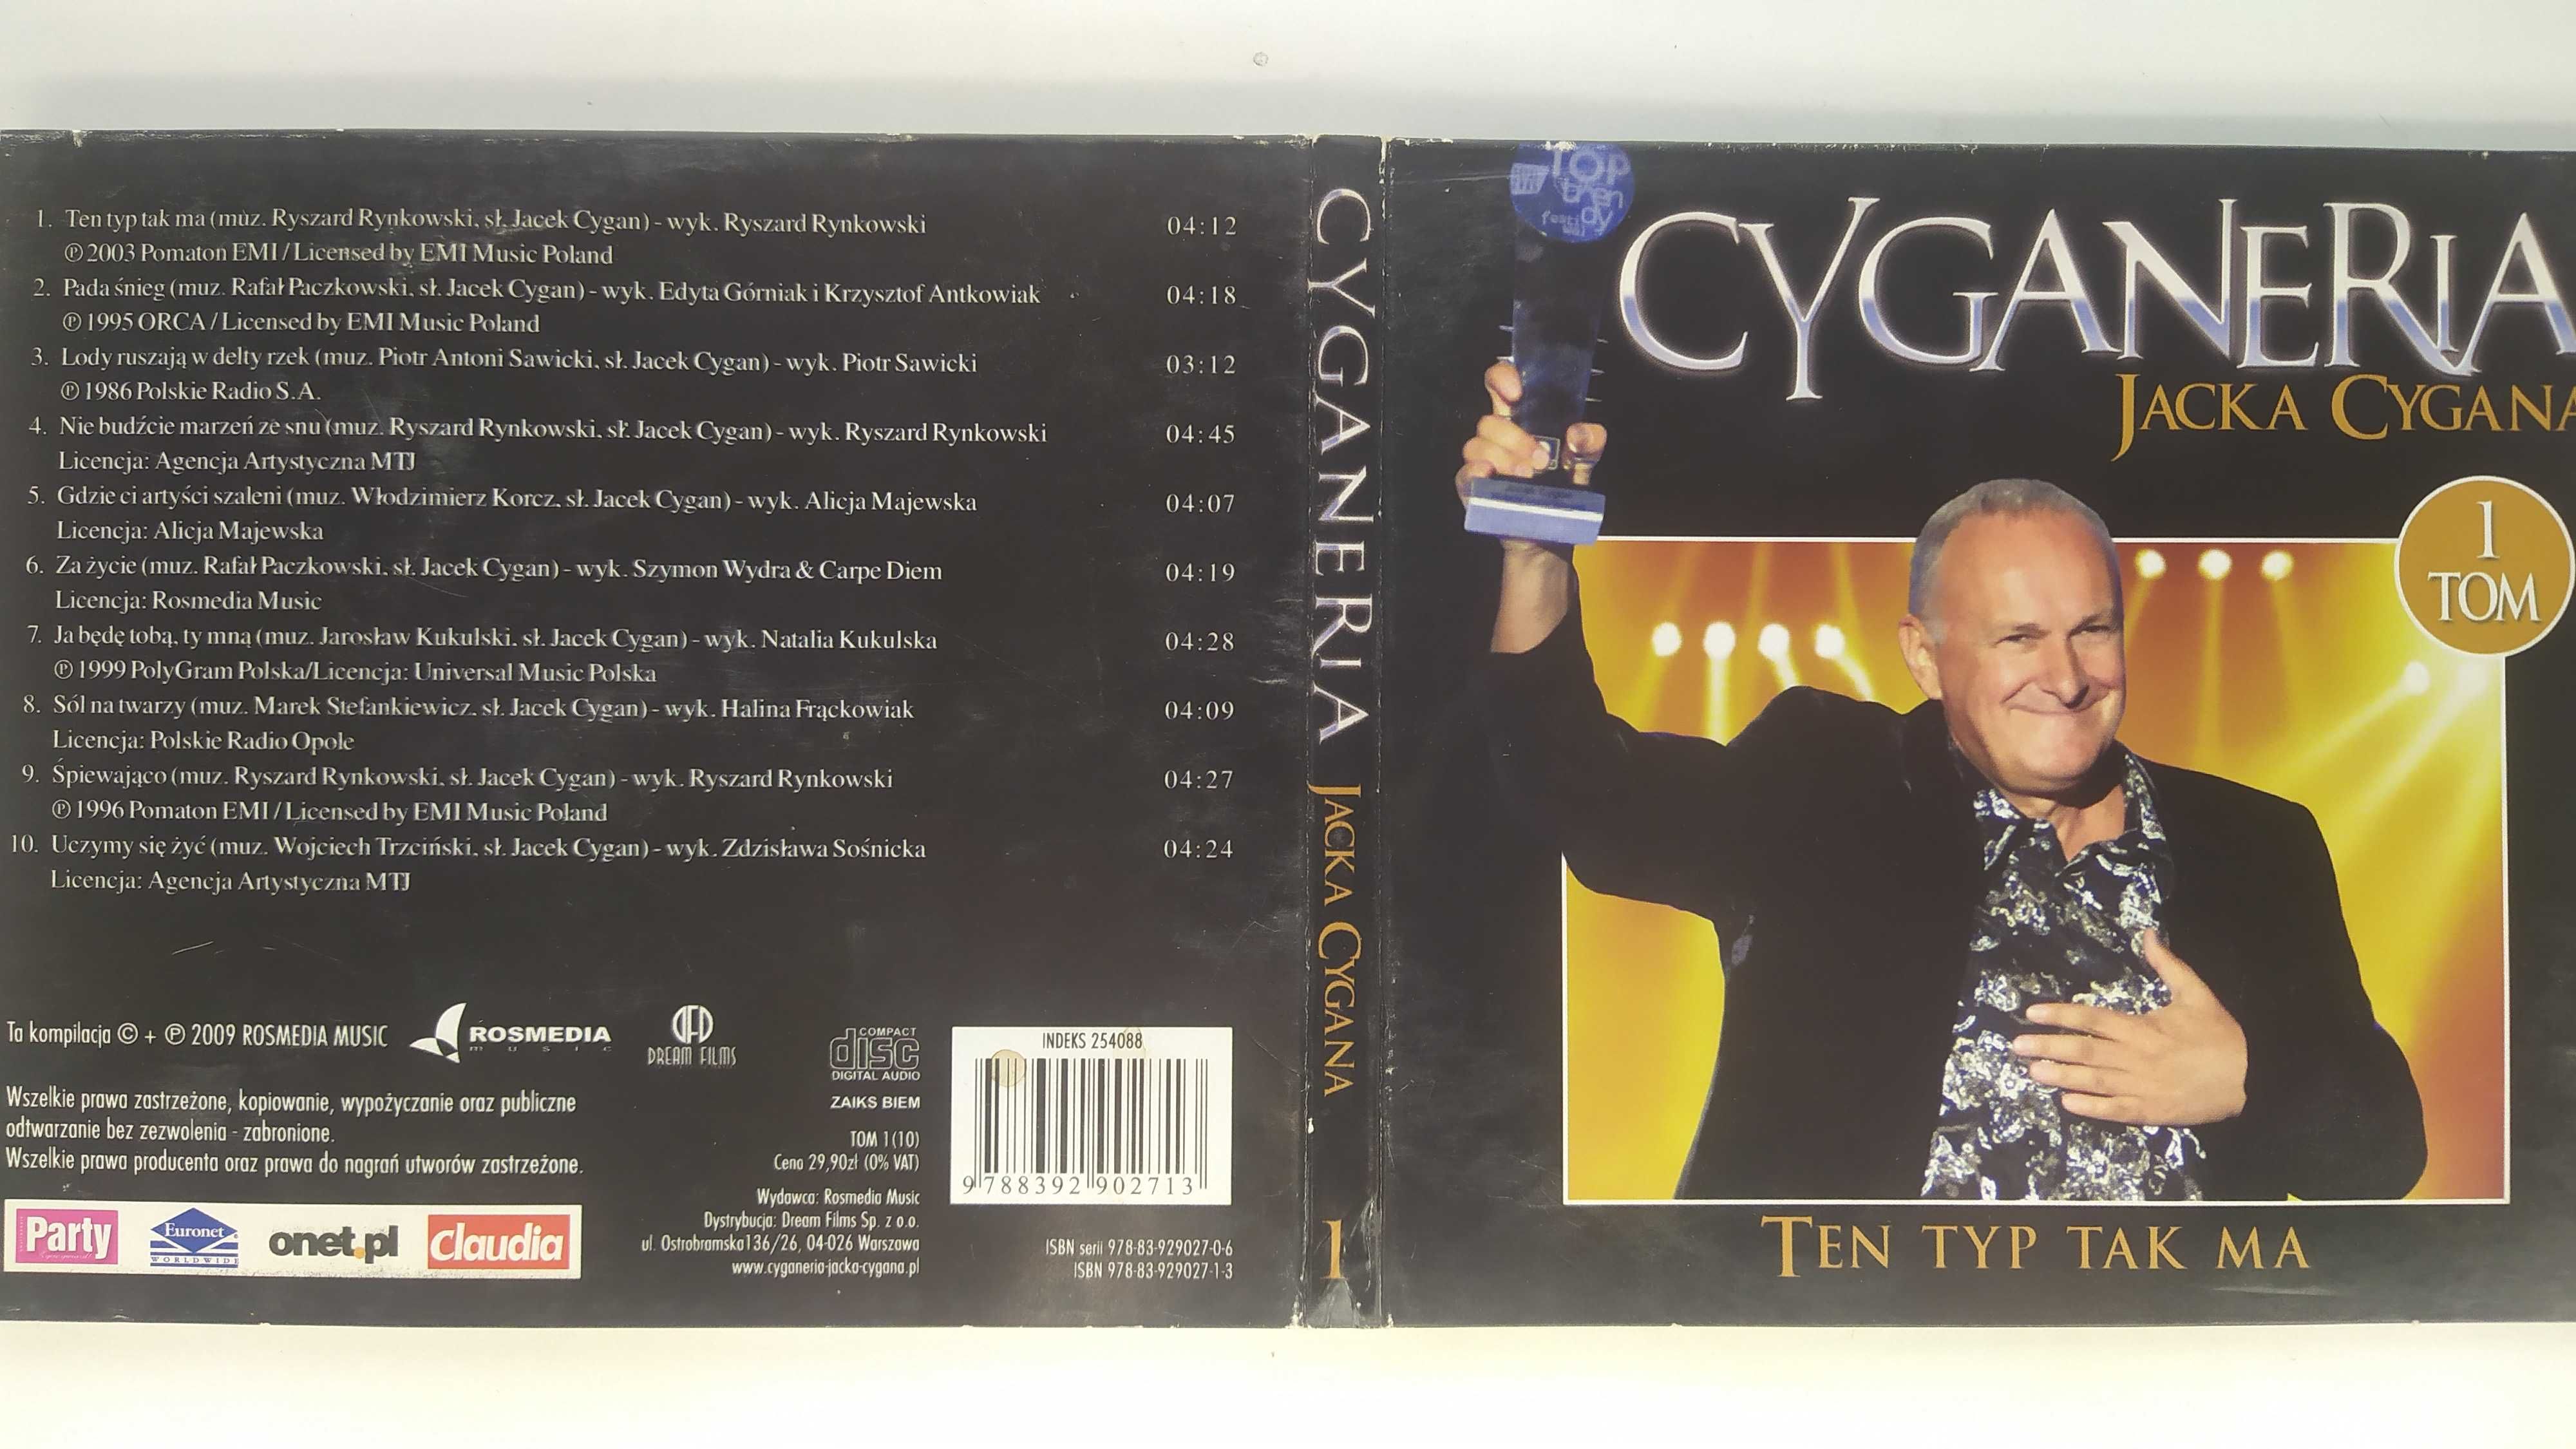 Cyganeria Jacka Cygana 1 TOM CYGAN Ten typ tak ma cd digipack mini